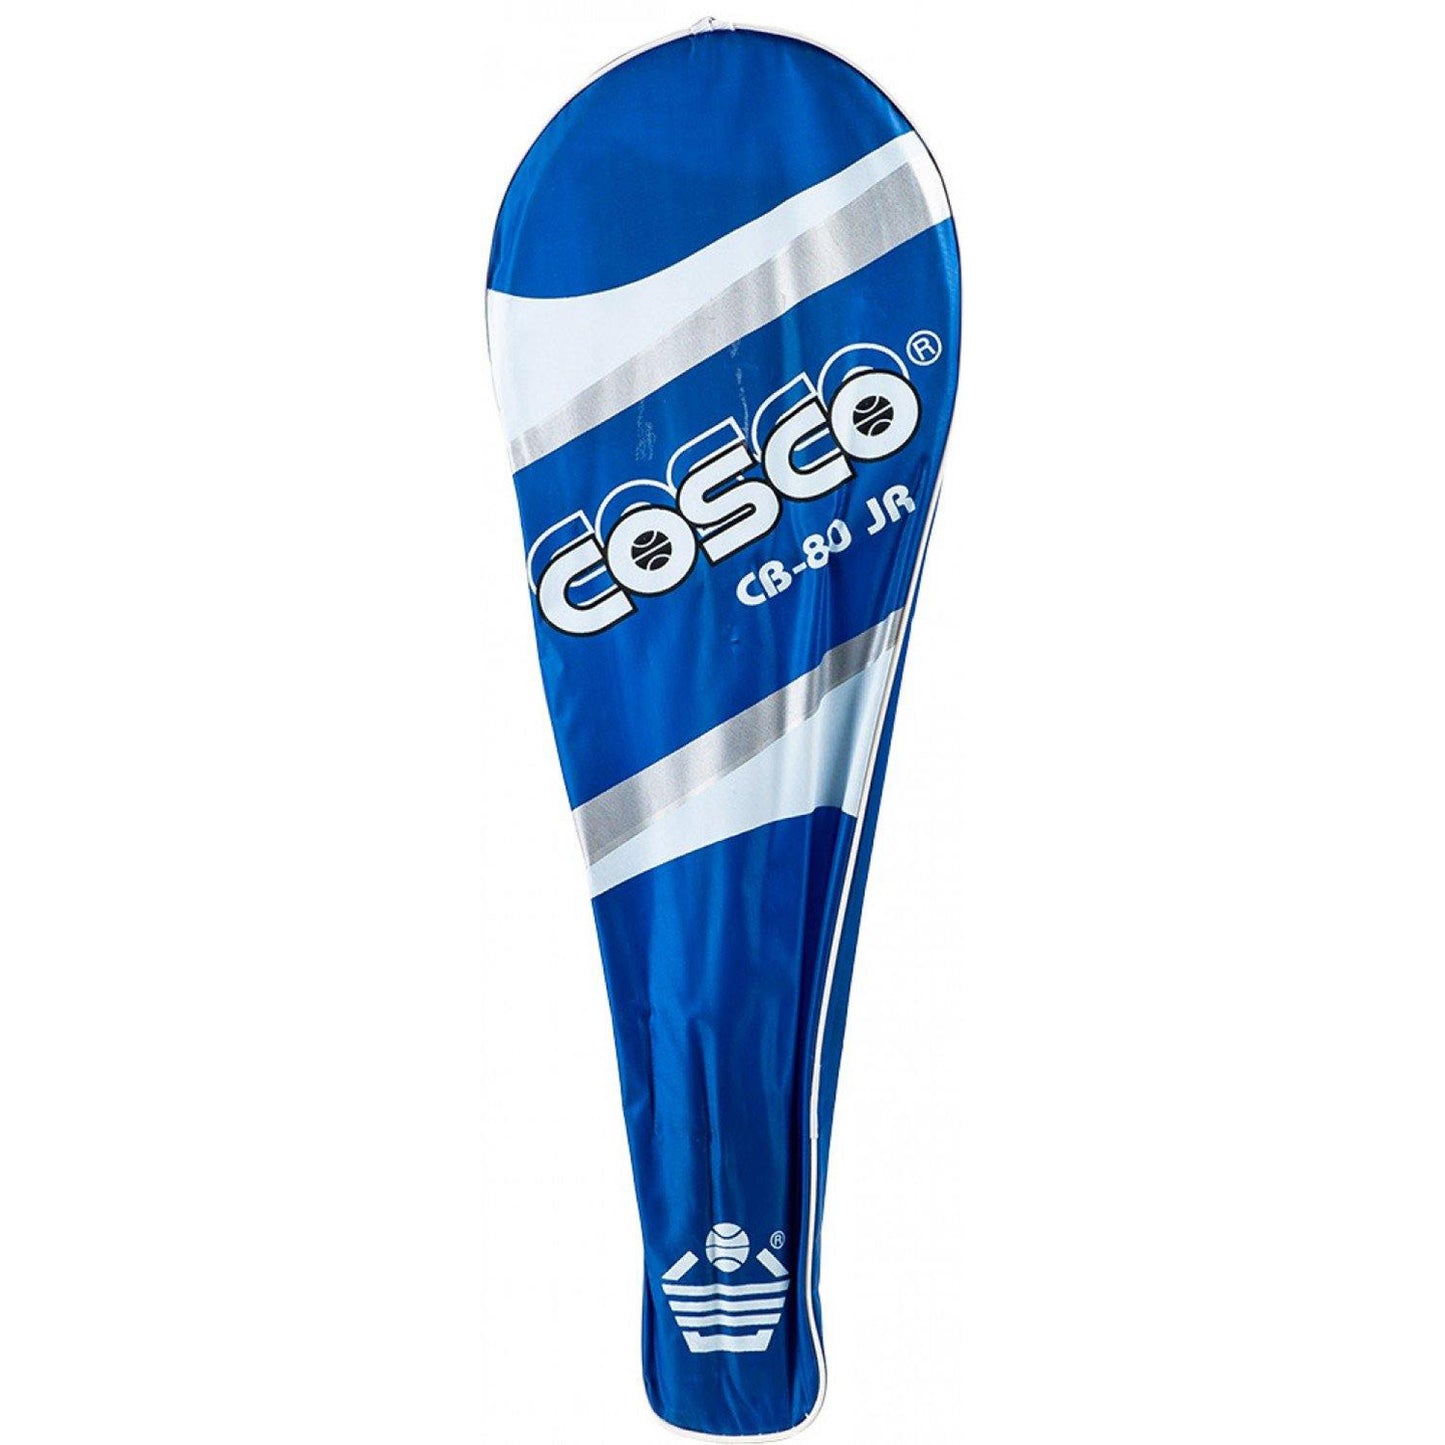 Cosco CB 80 Junior Badminton Racquet (Assorted) - Best Price online Prokicksports.com